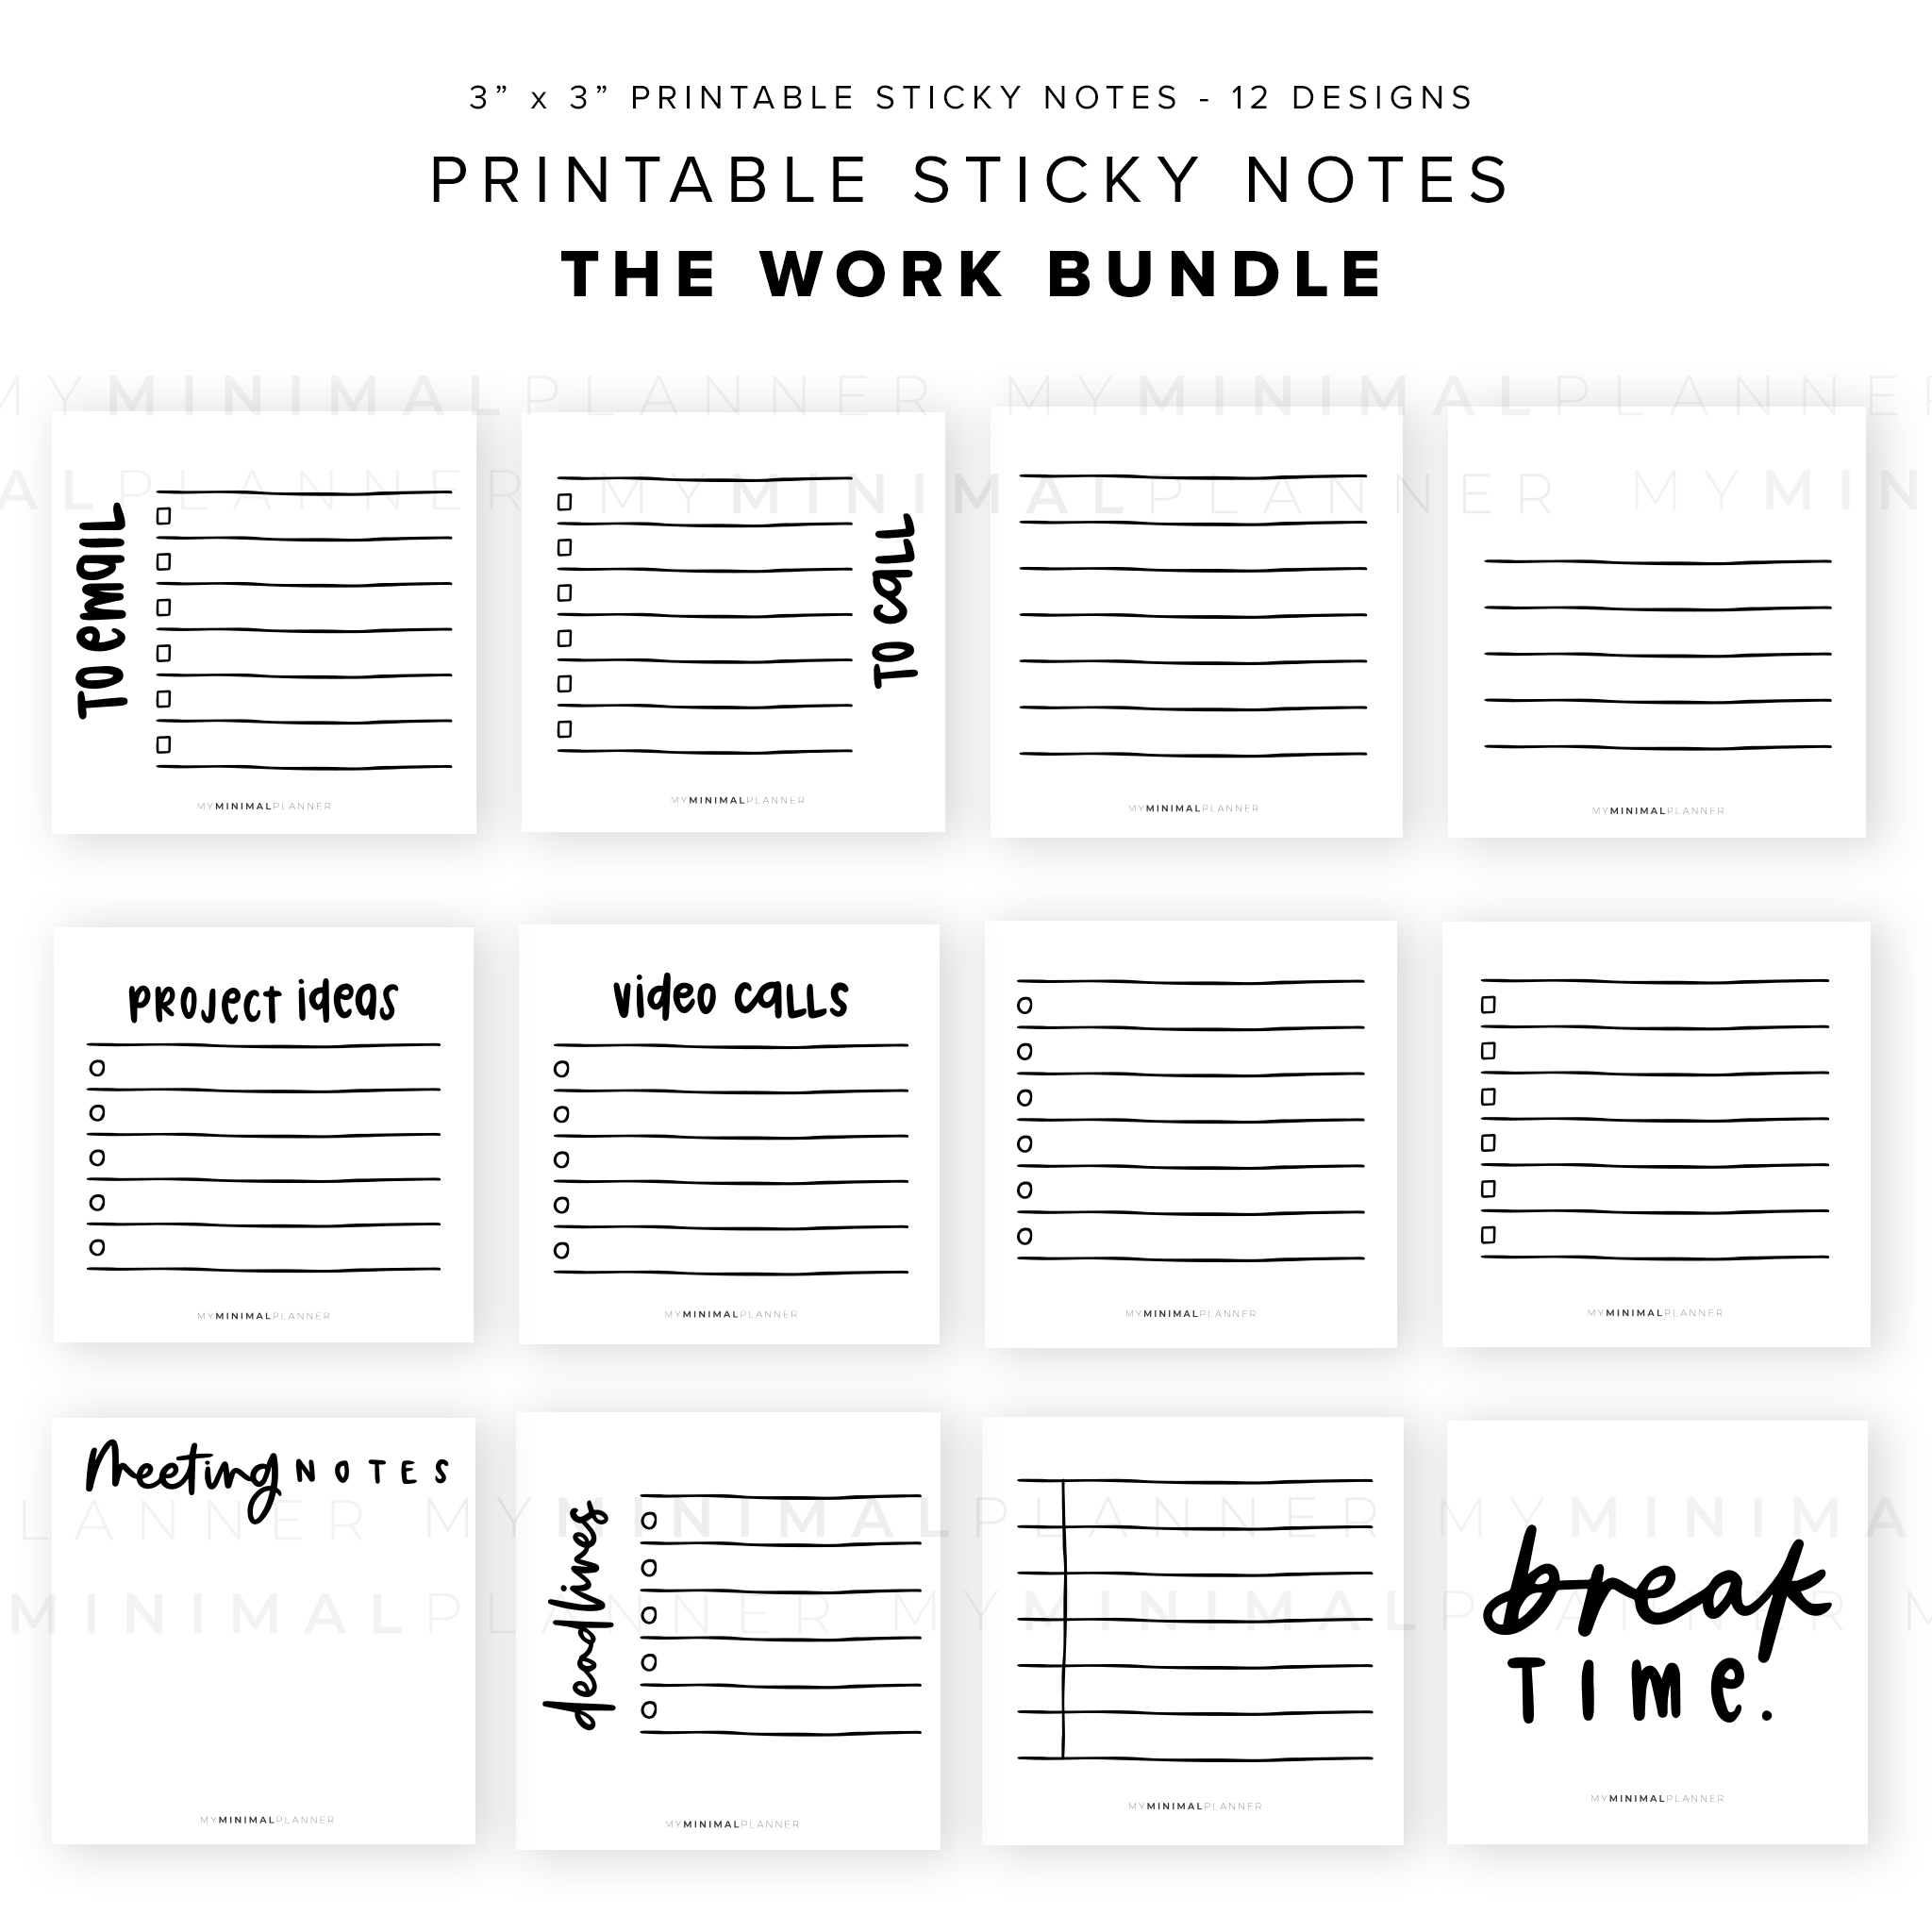 PSN01 - The Work Bundle - Printable Sticky Notes